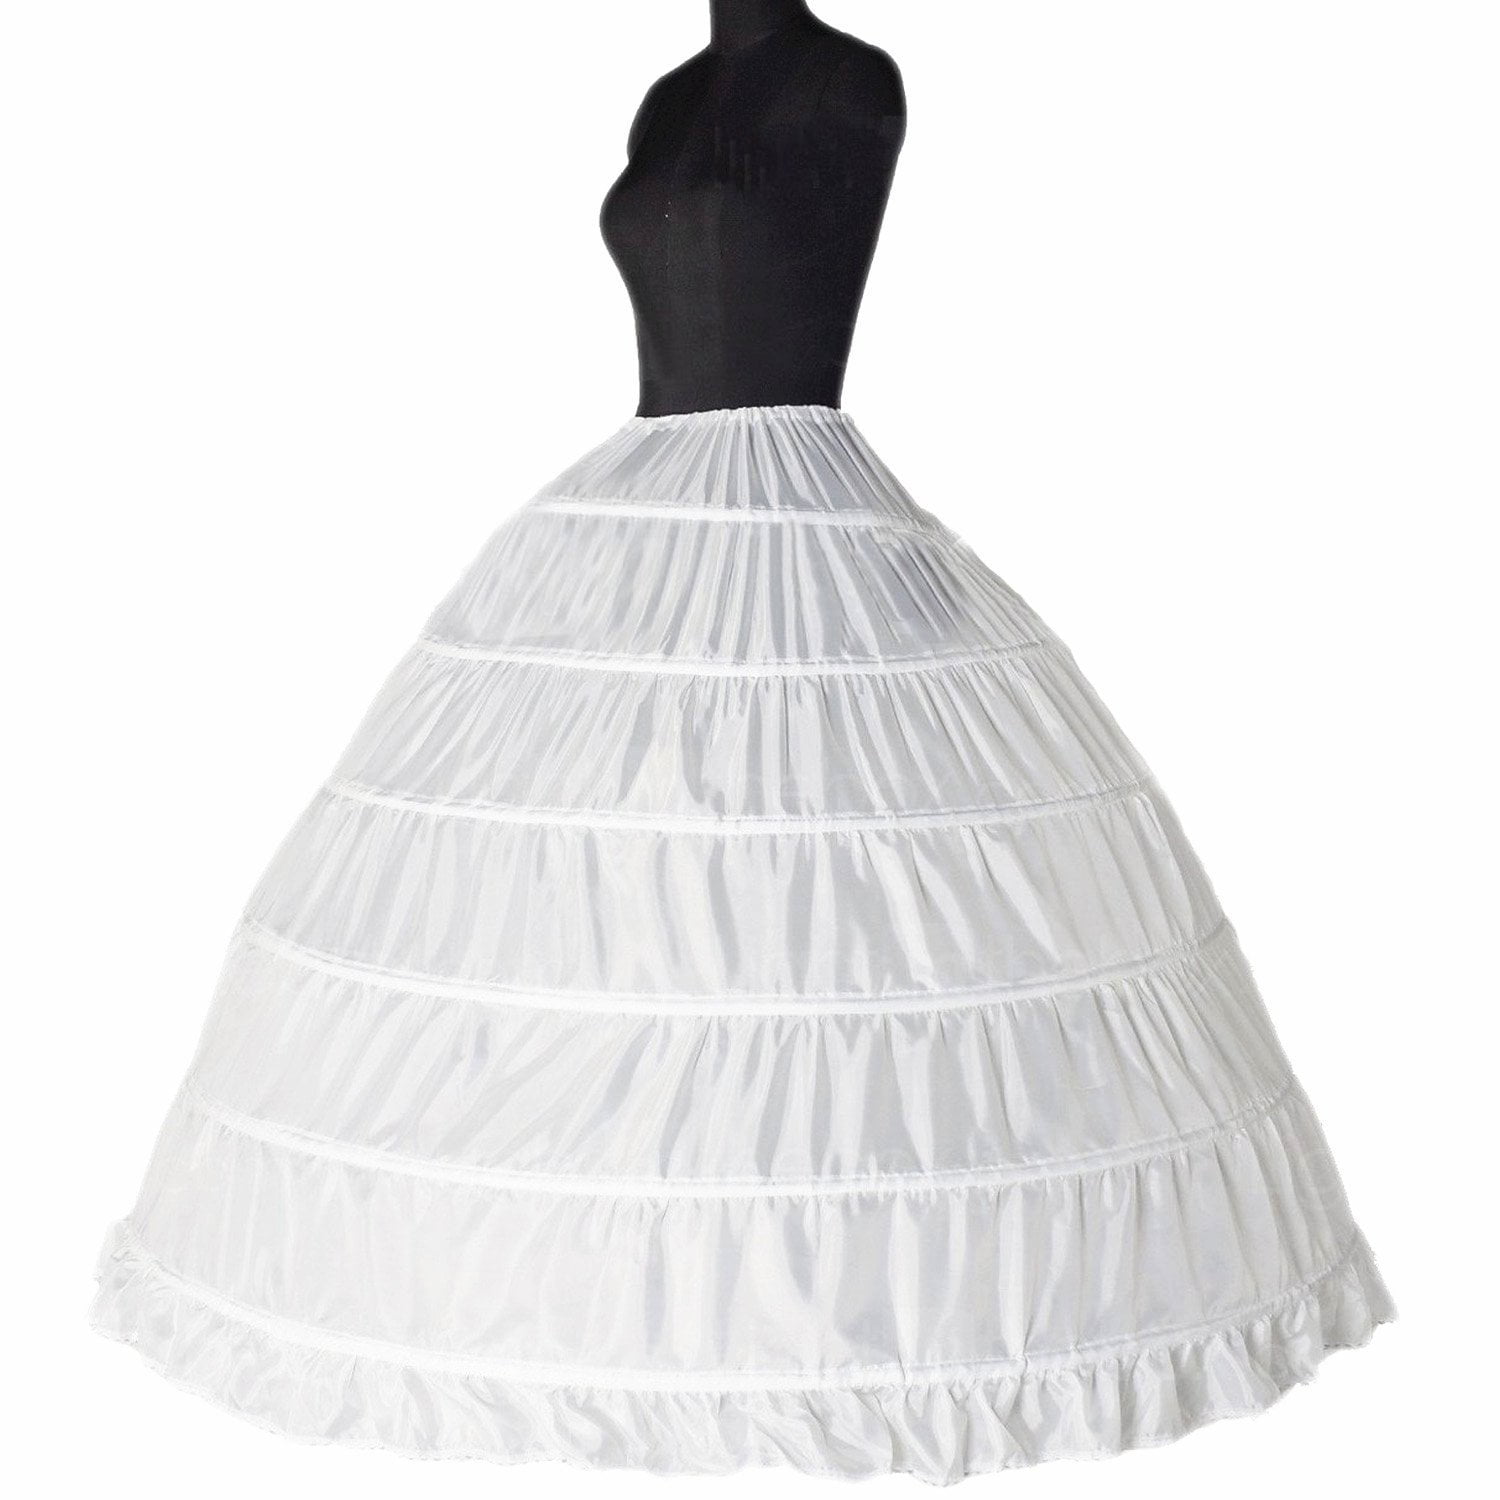 10 Style White A-Line/Hoop/Hoopless/Short Crinoline Petticoat/Underskirt wedding 